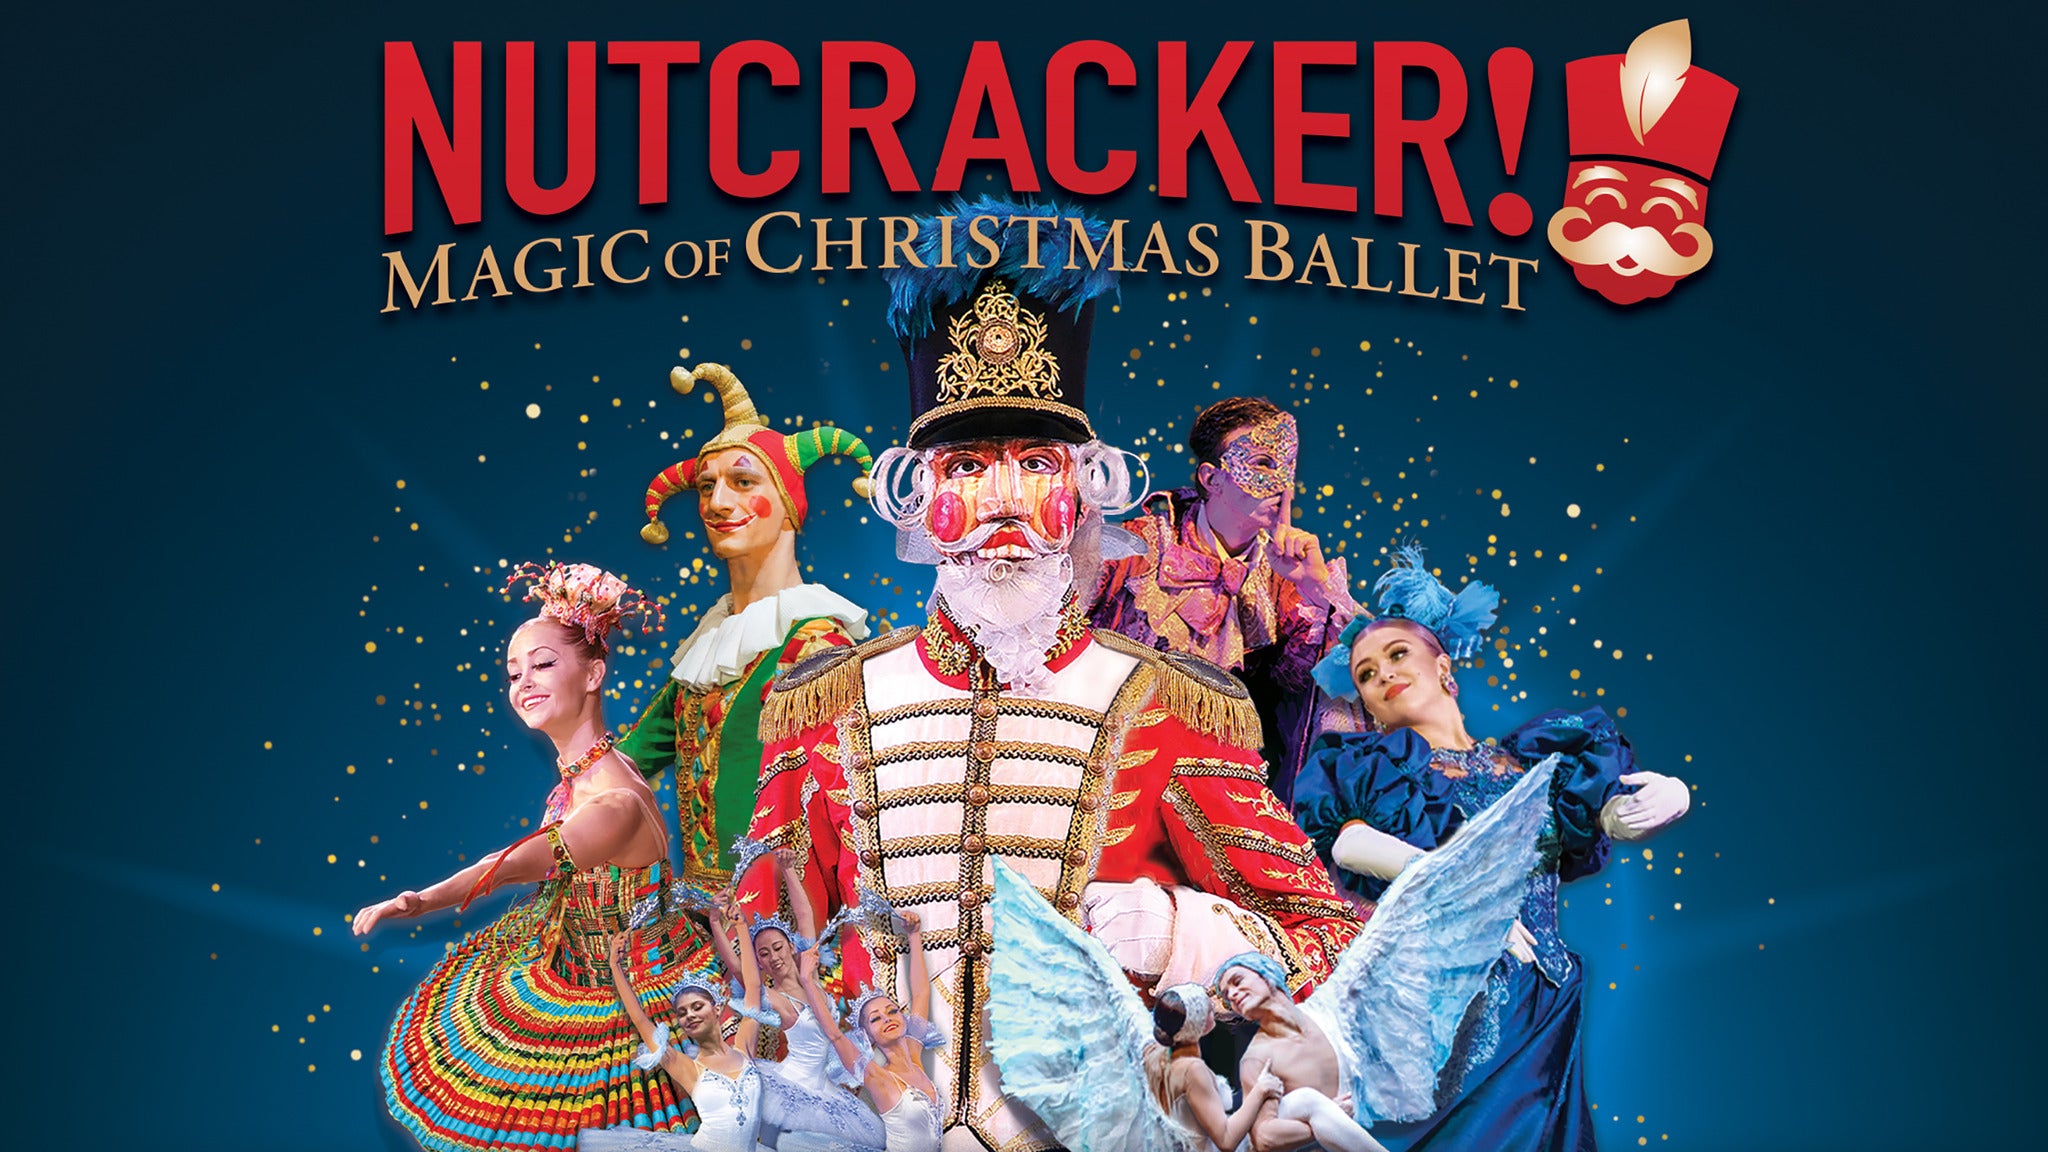 Nutcracker! Magic of Christmas Ballet at Alabama Theatre